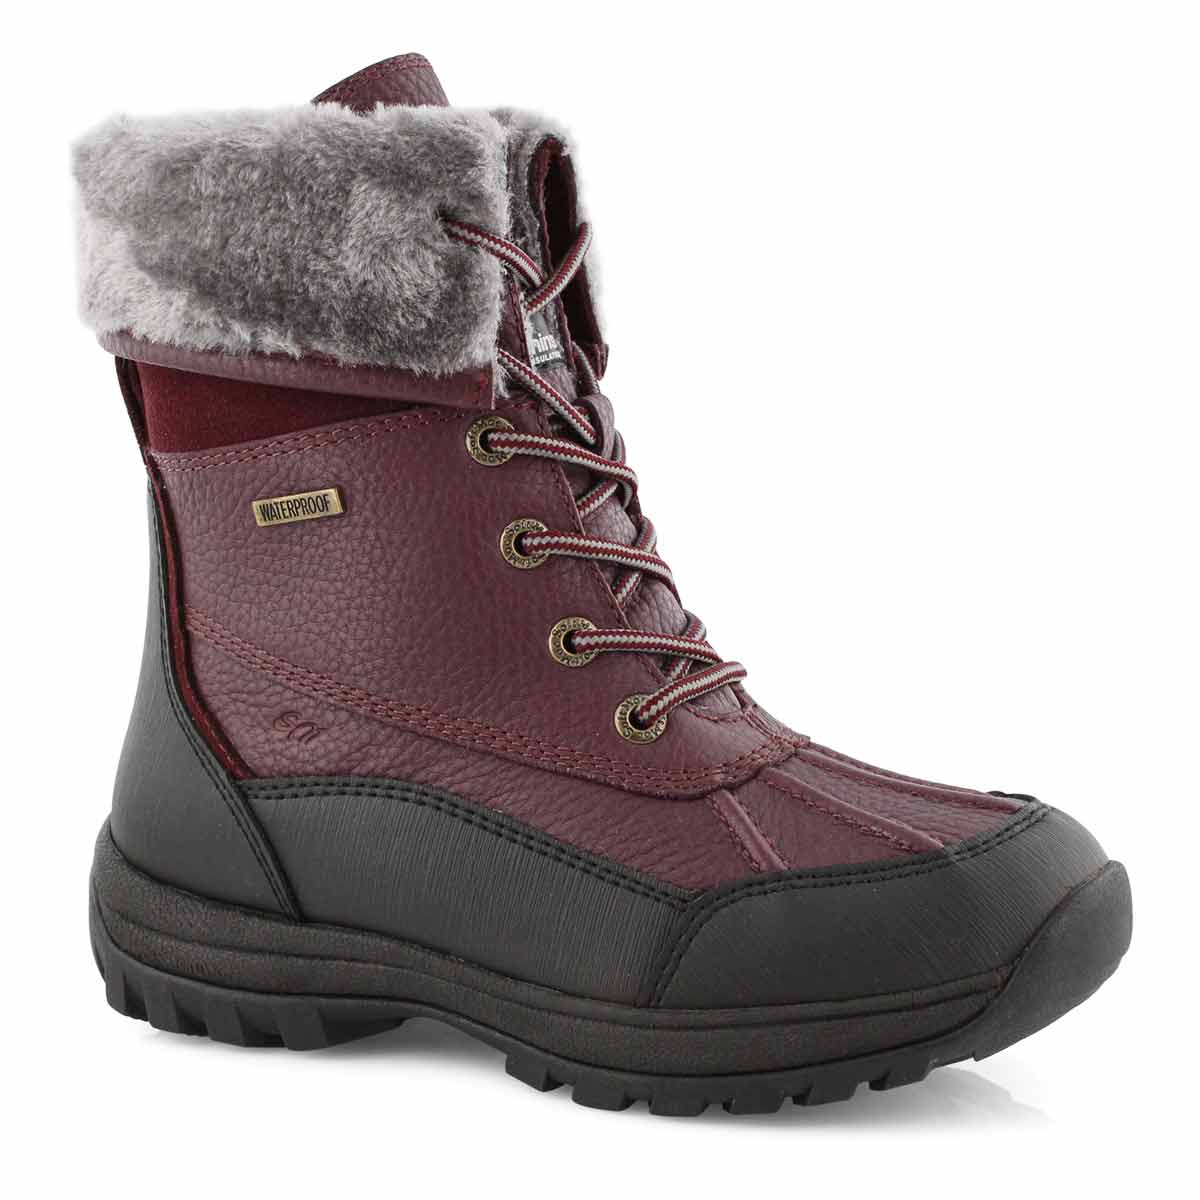 women's winter boots softmoc